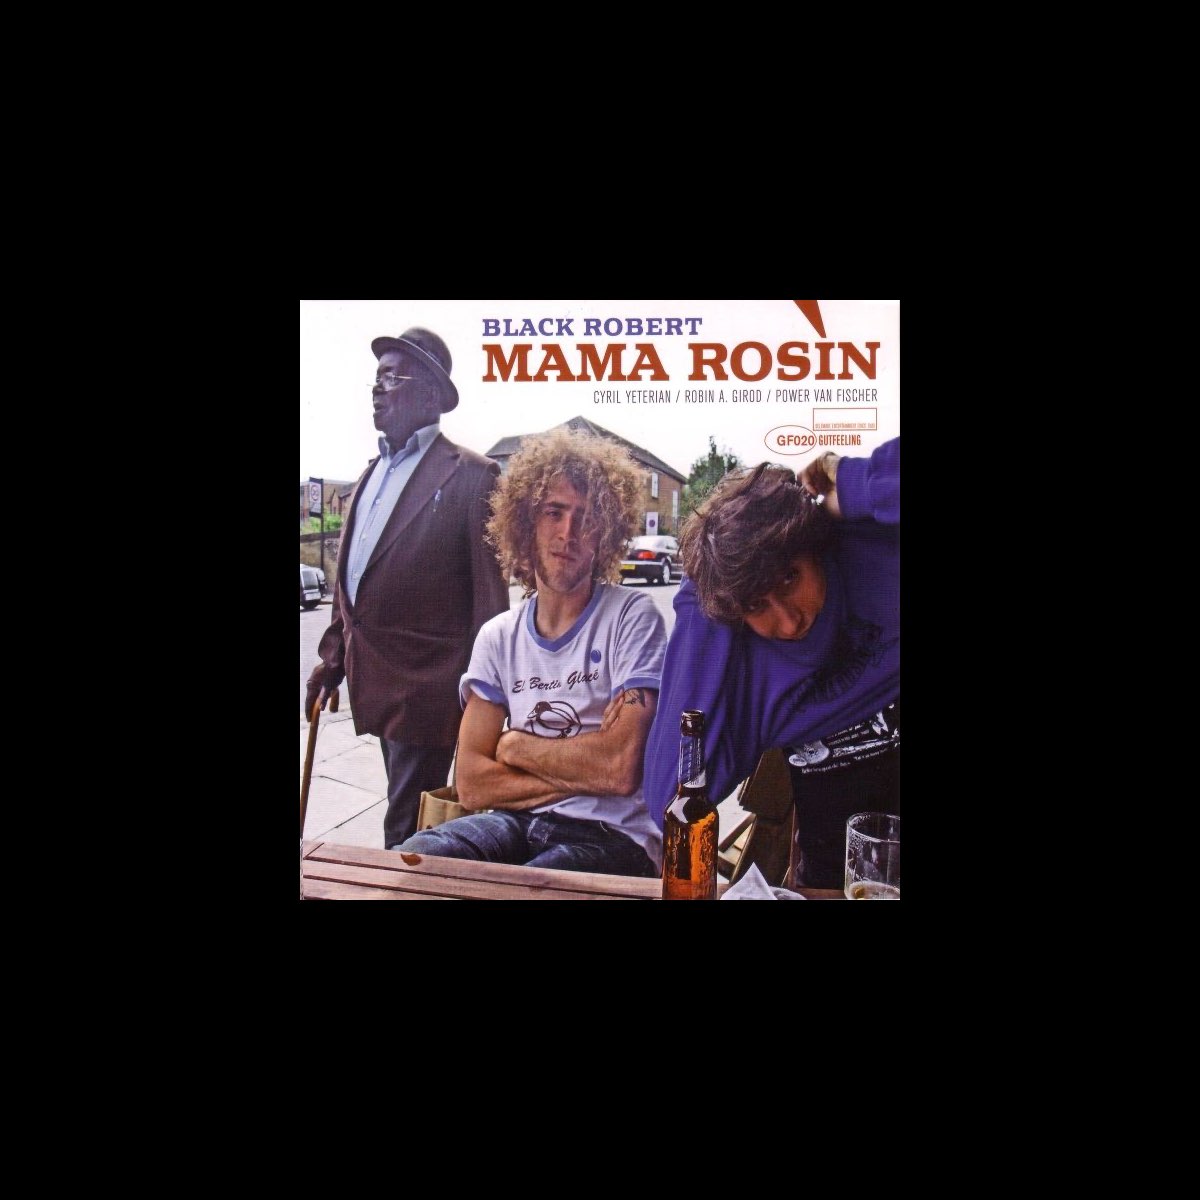 Black Robert by Mama Rosin on Apple Music